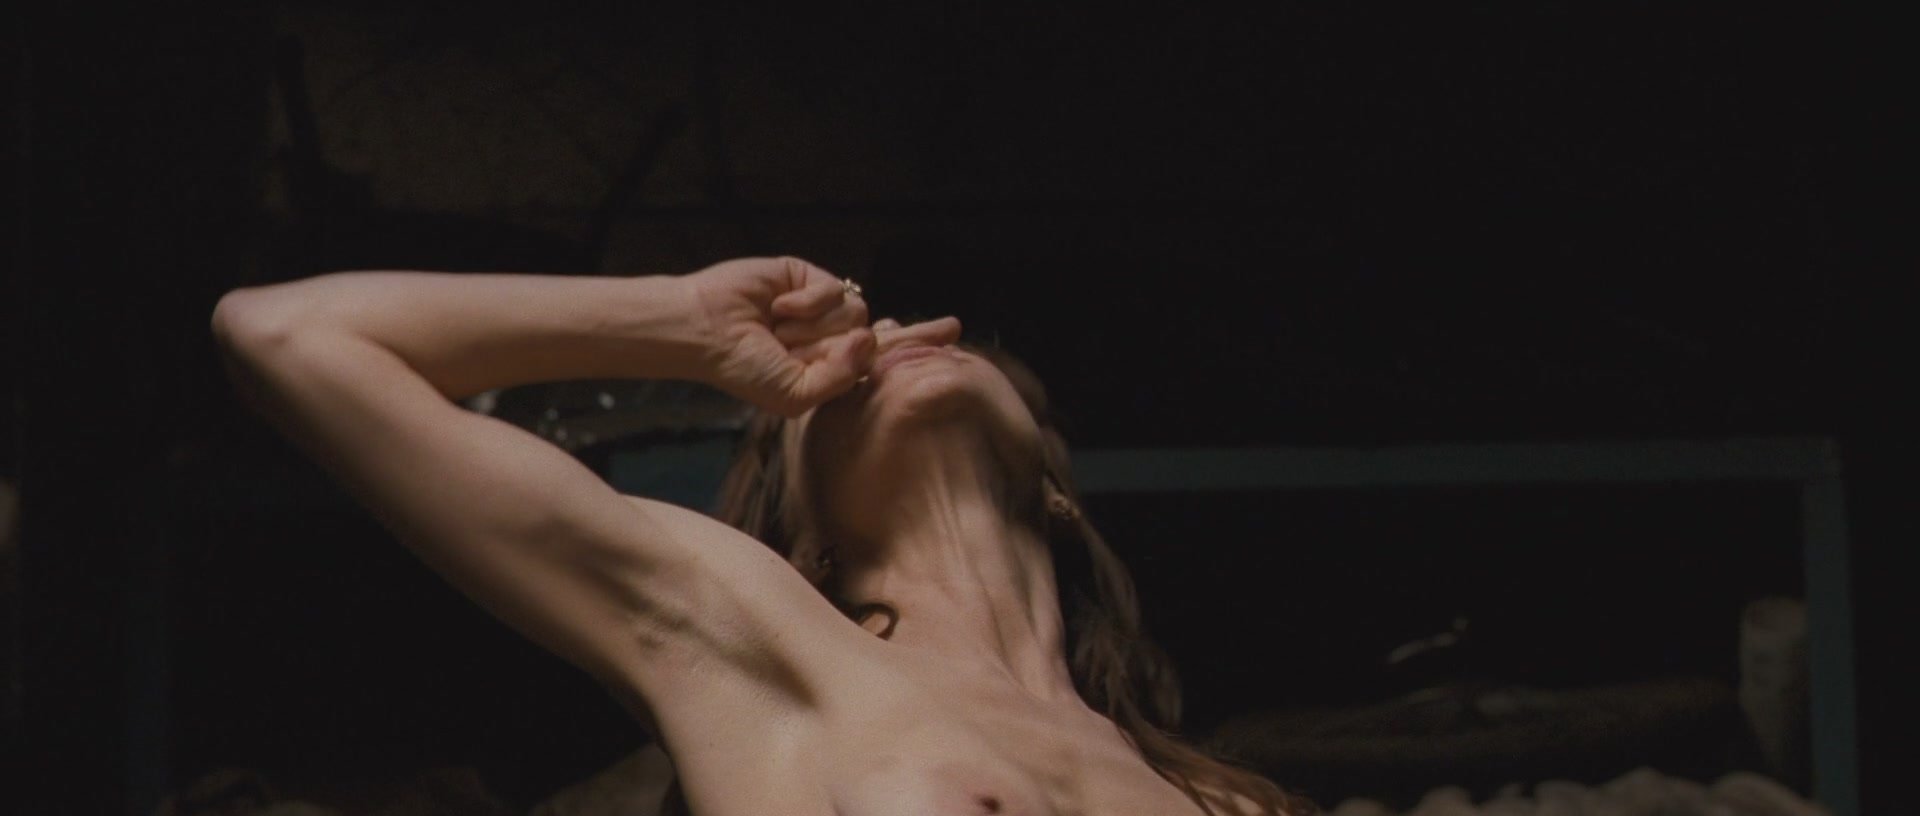 Фрэнсис О'Коннор nude pics.